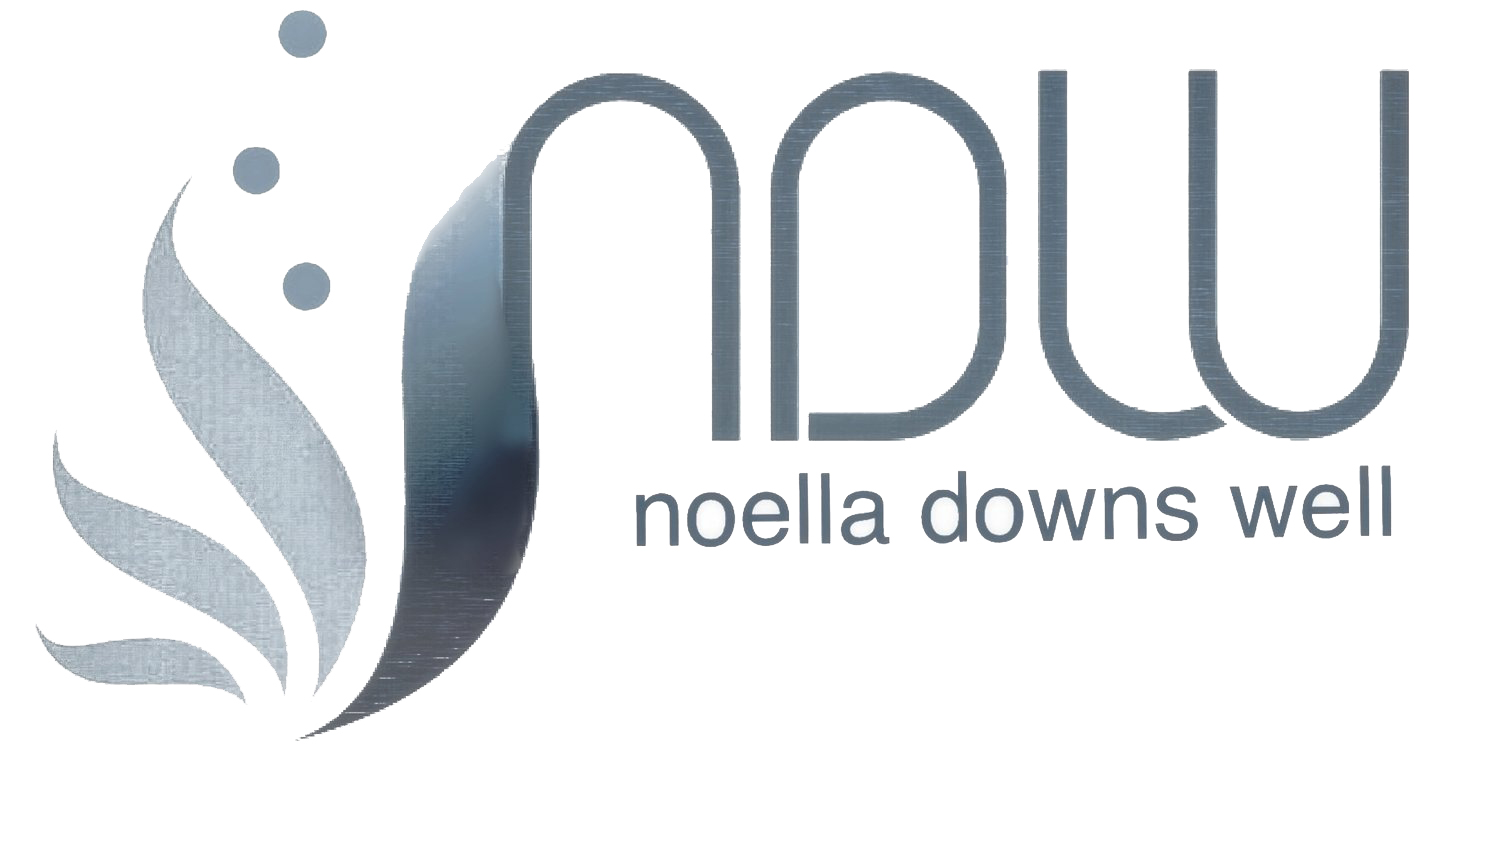 noella downs well